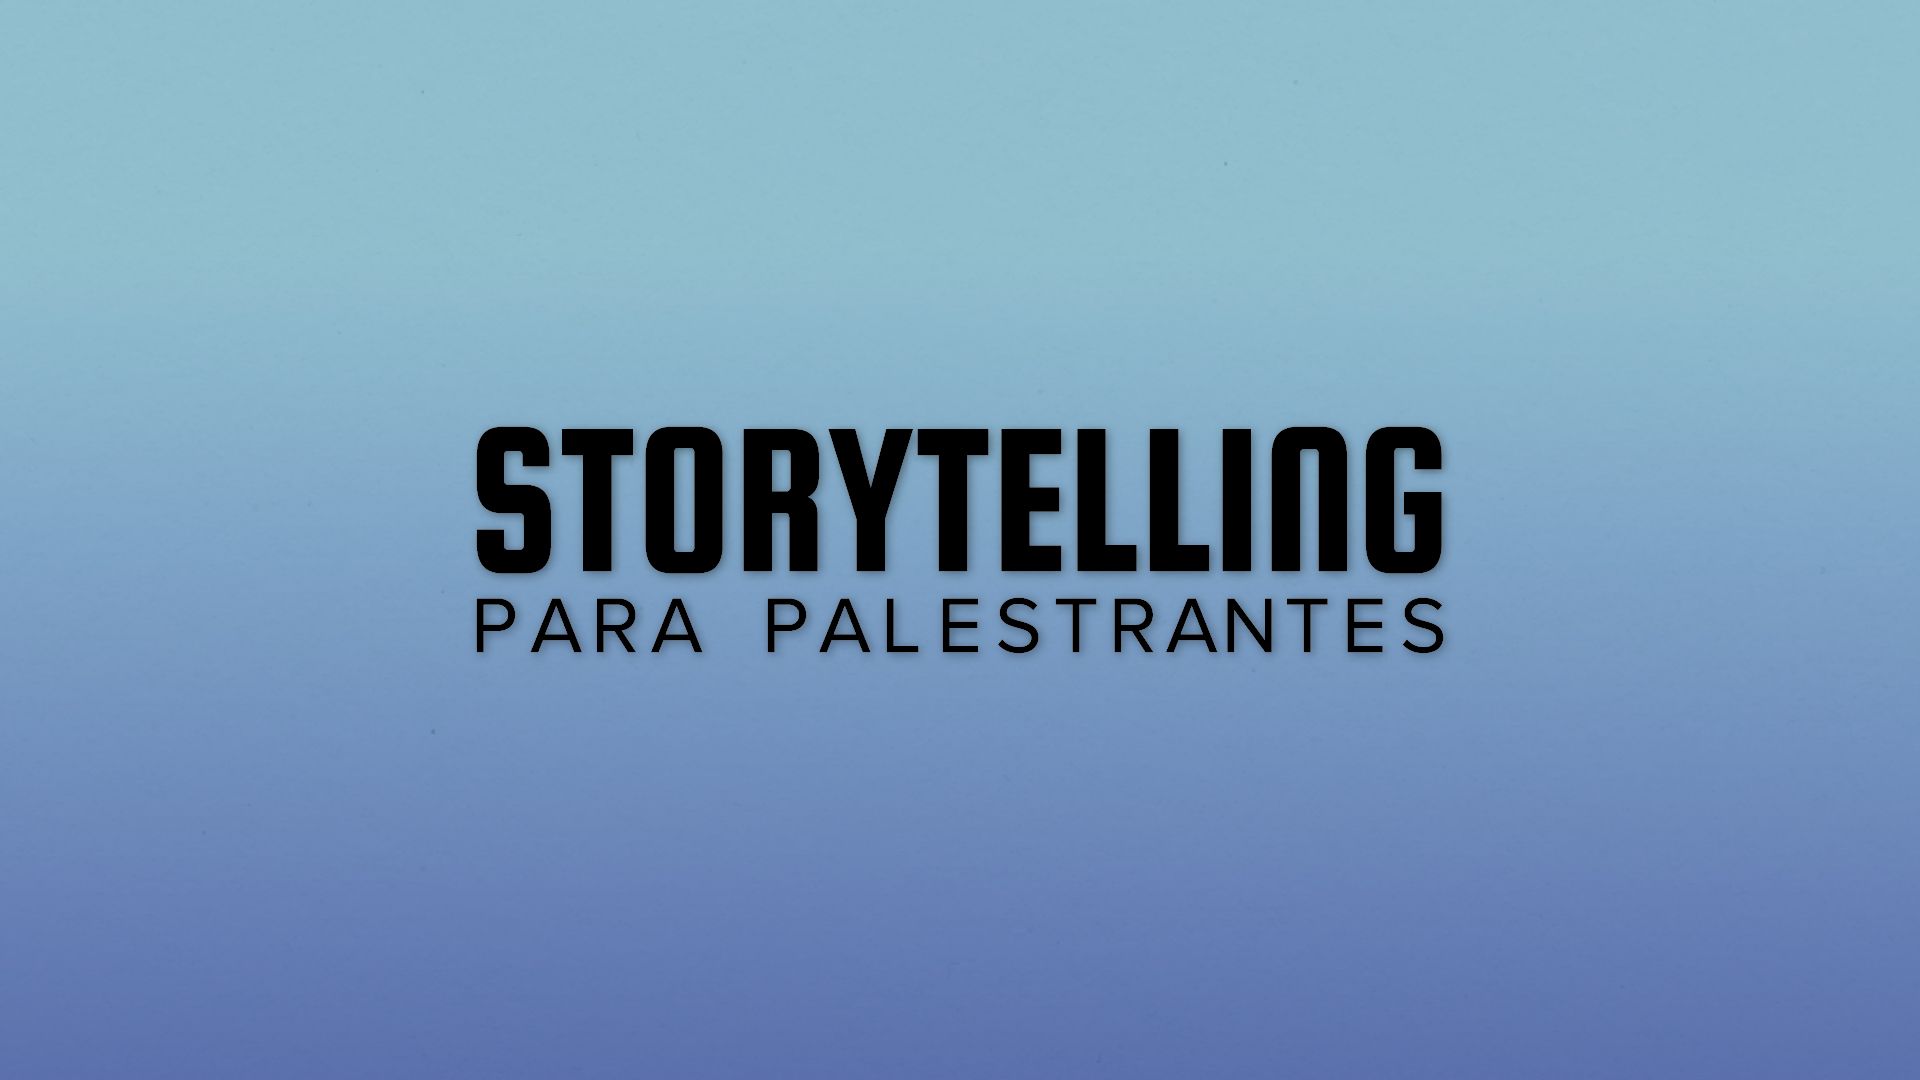 Storytelling para Palestrantes